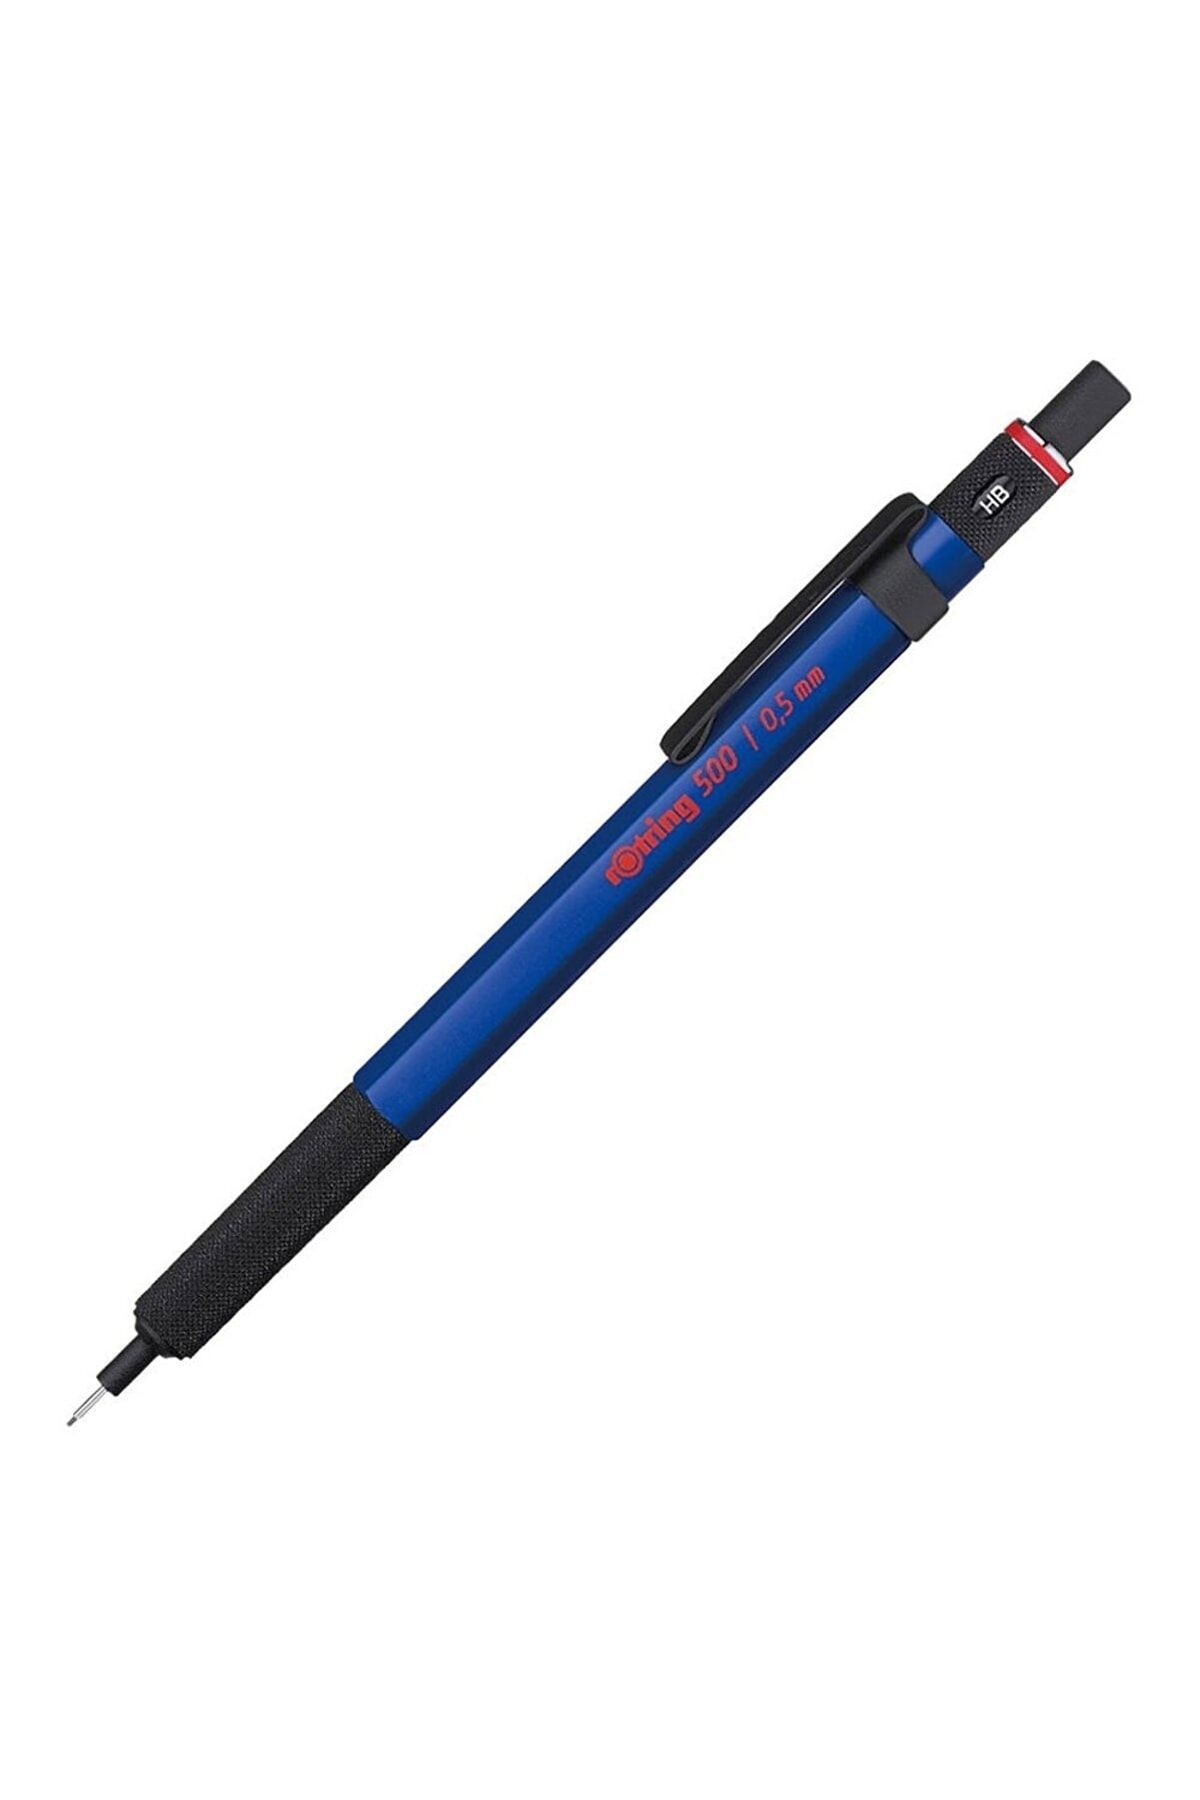 Rotring Versatil Kalem (mekanik Uçlu Kurşun Kalem) 500 Mavi 0.5 Mm 2164105